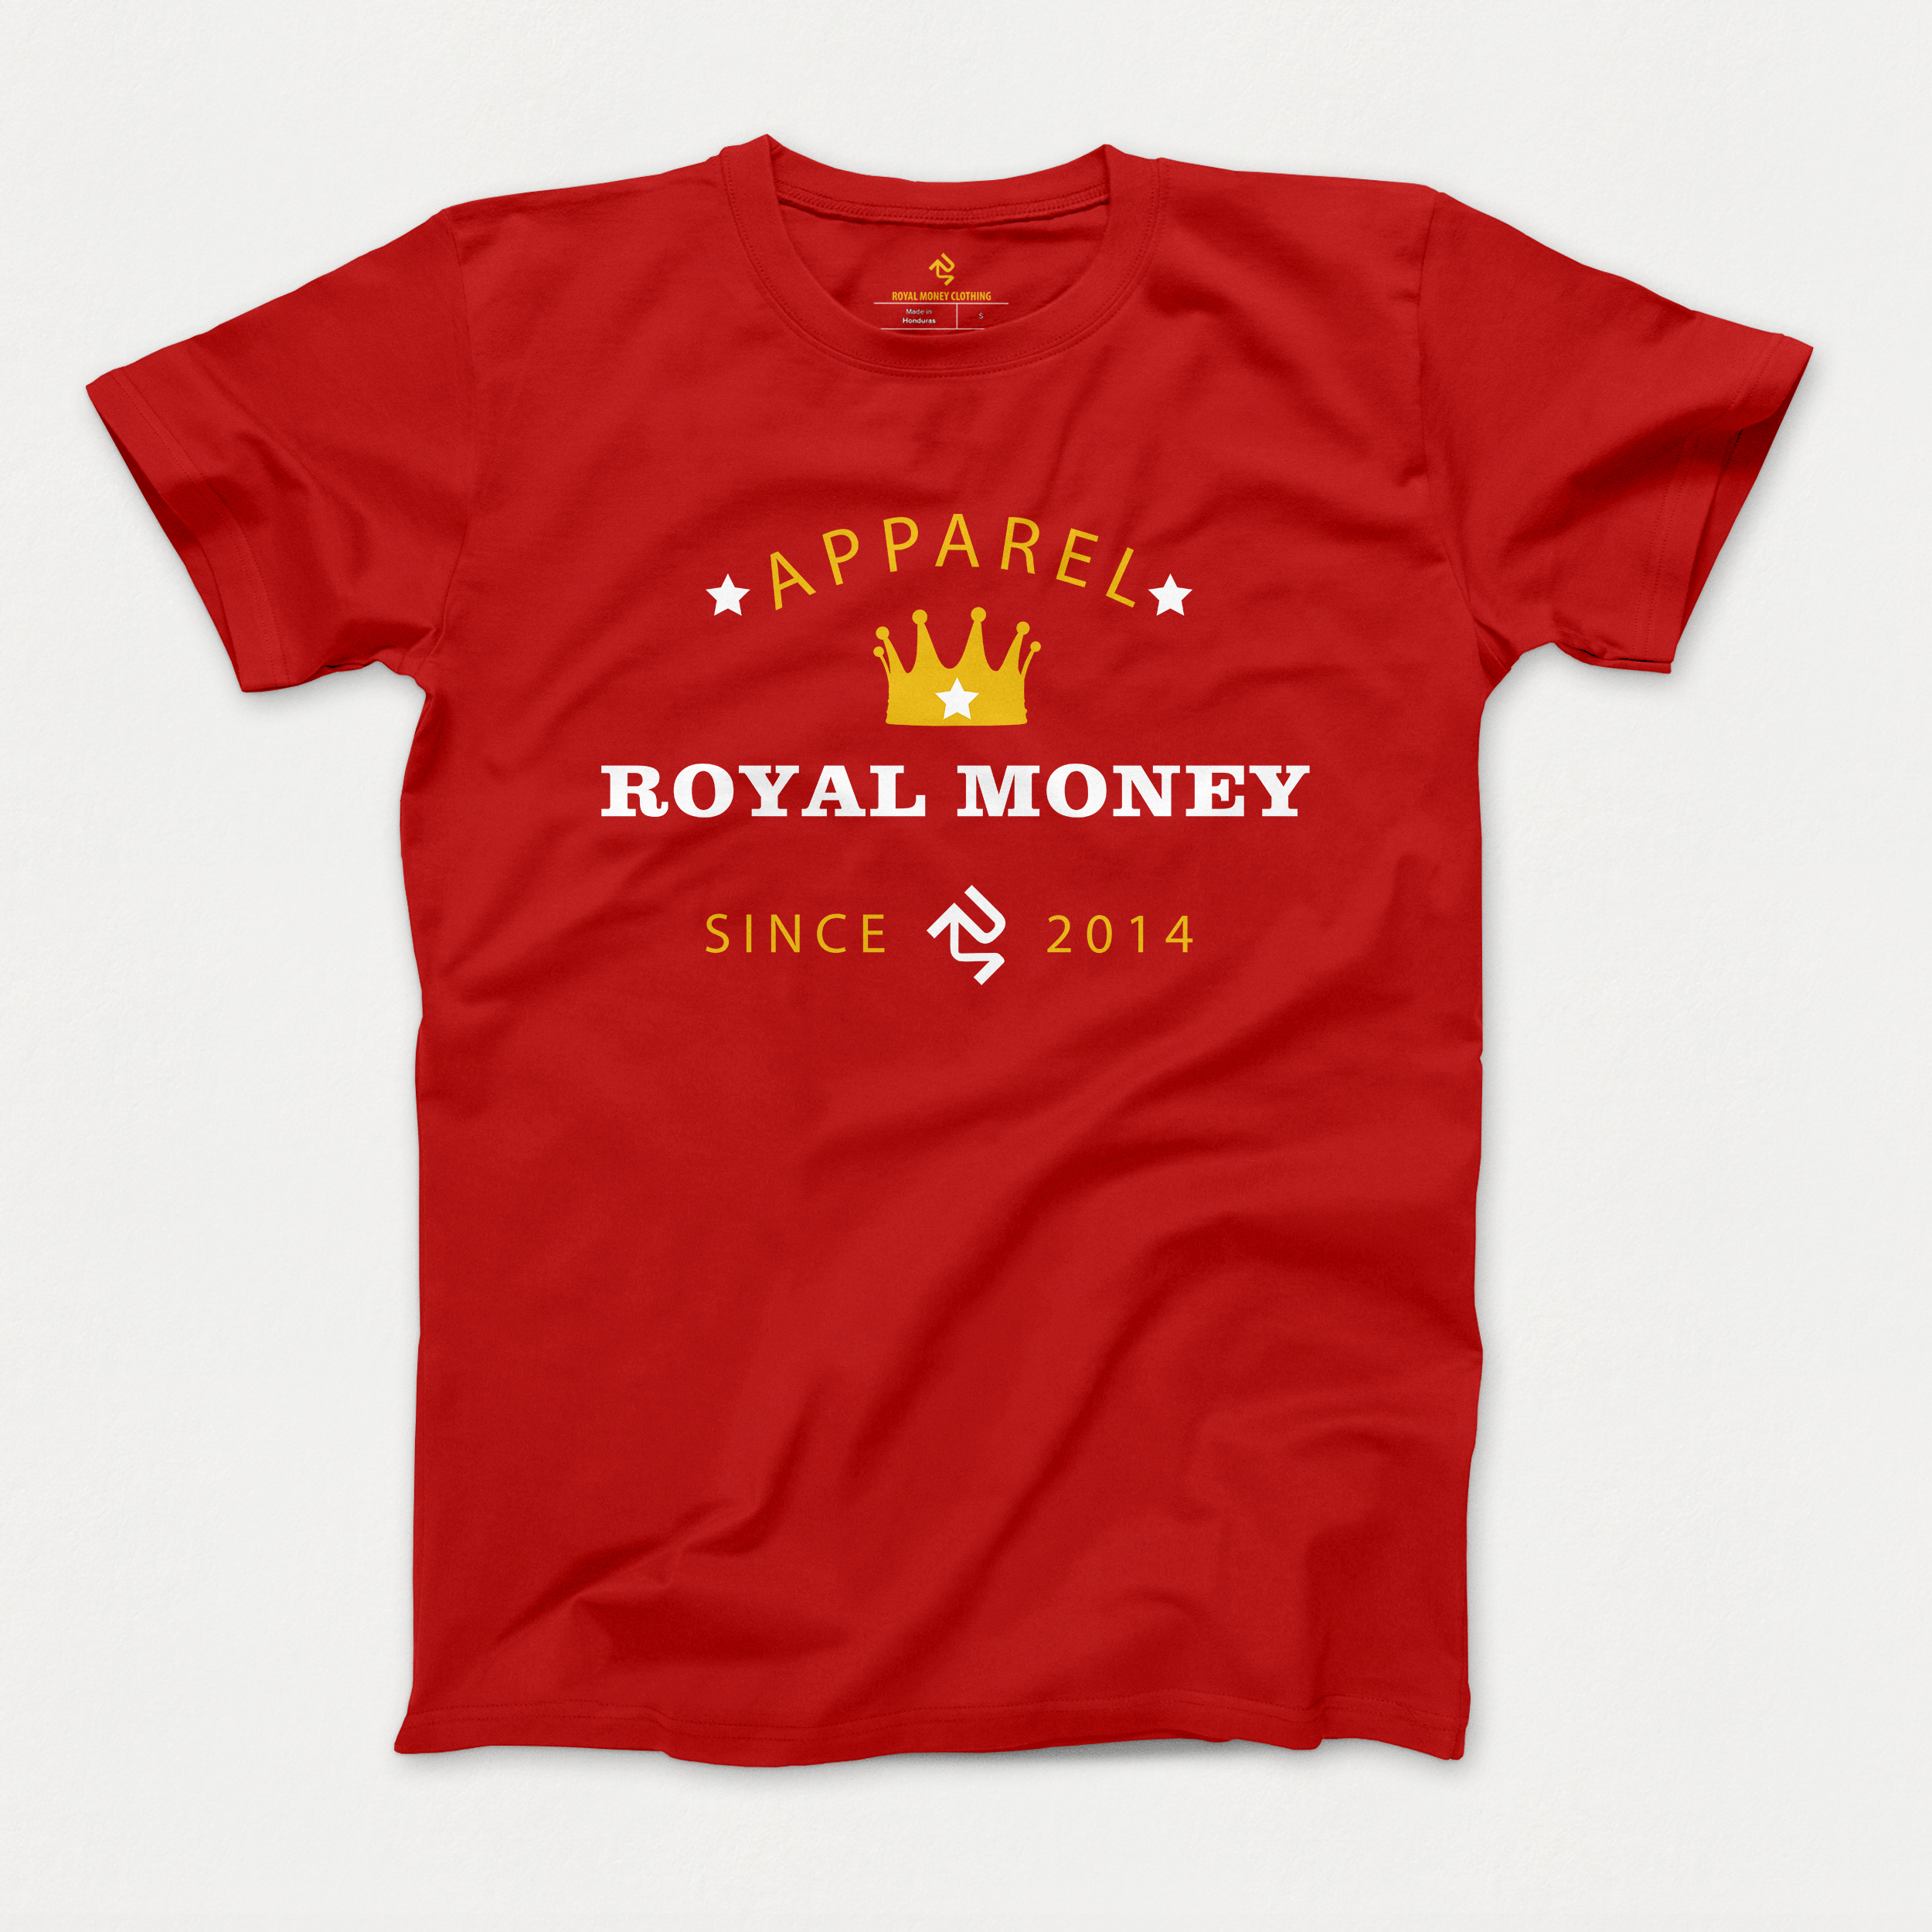  royal money clothing line shirt t shirt design graphic tees t shirt printing off white tee white t shirt, men, black excellence